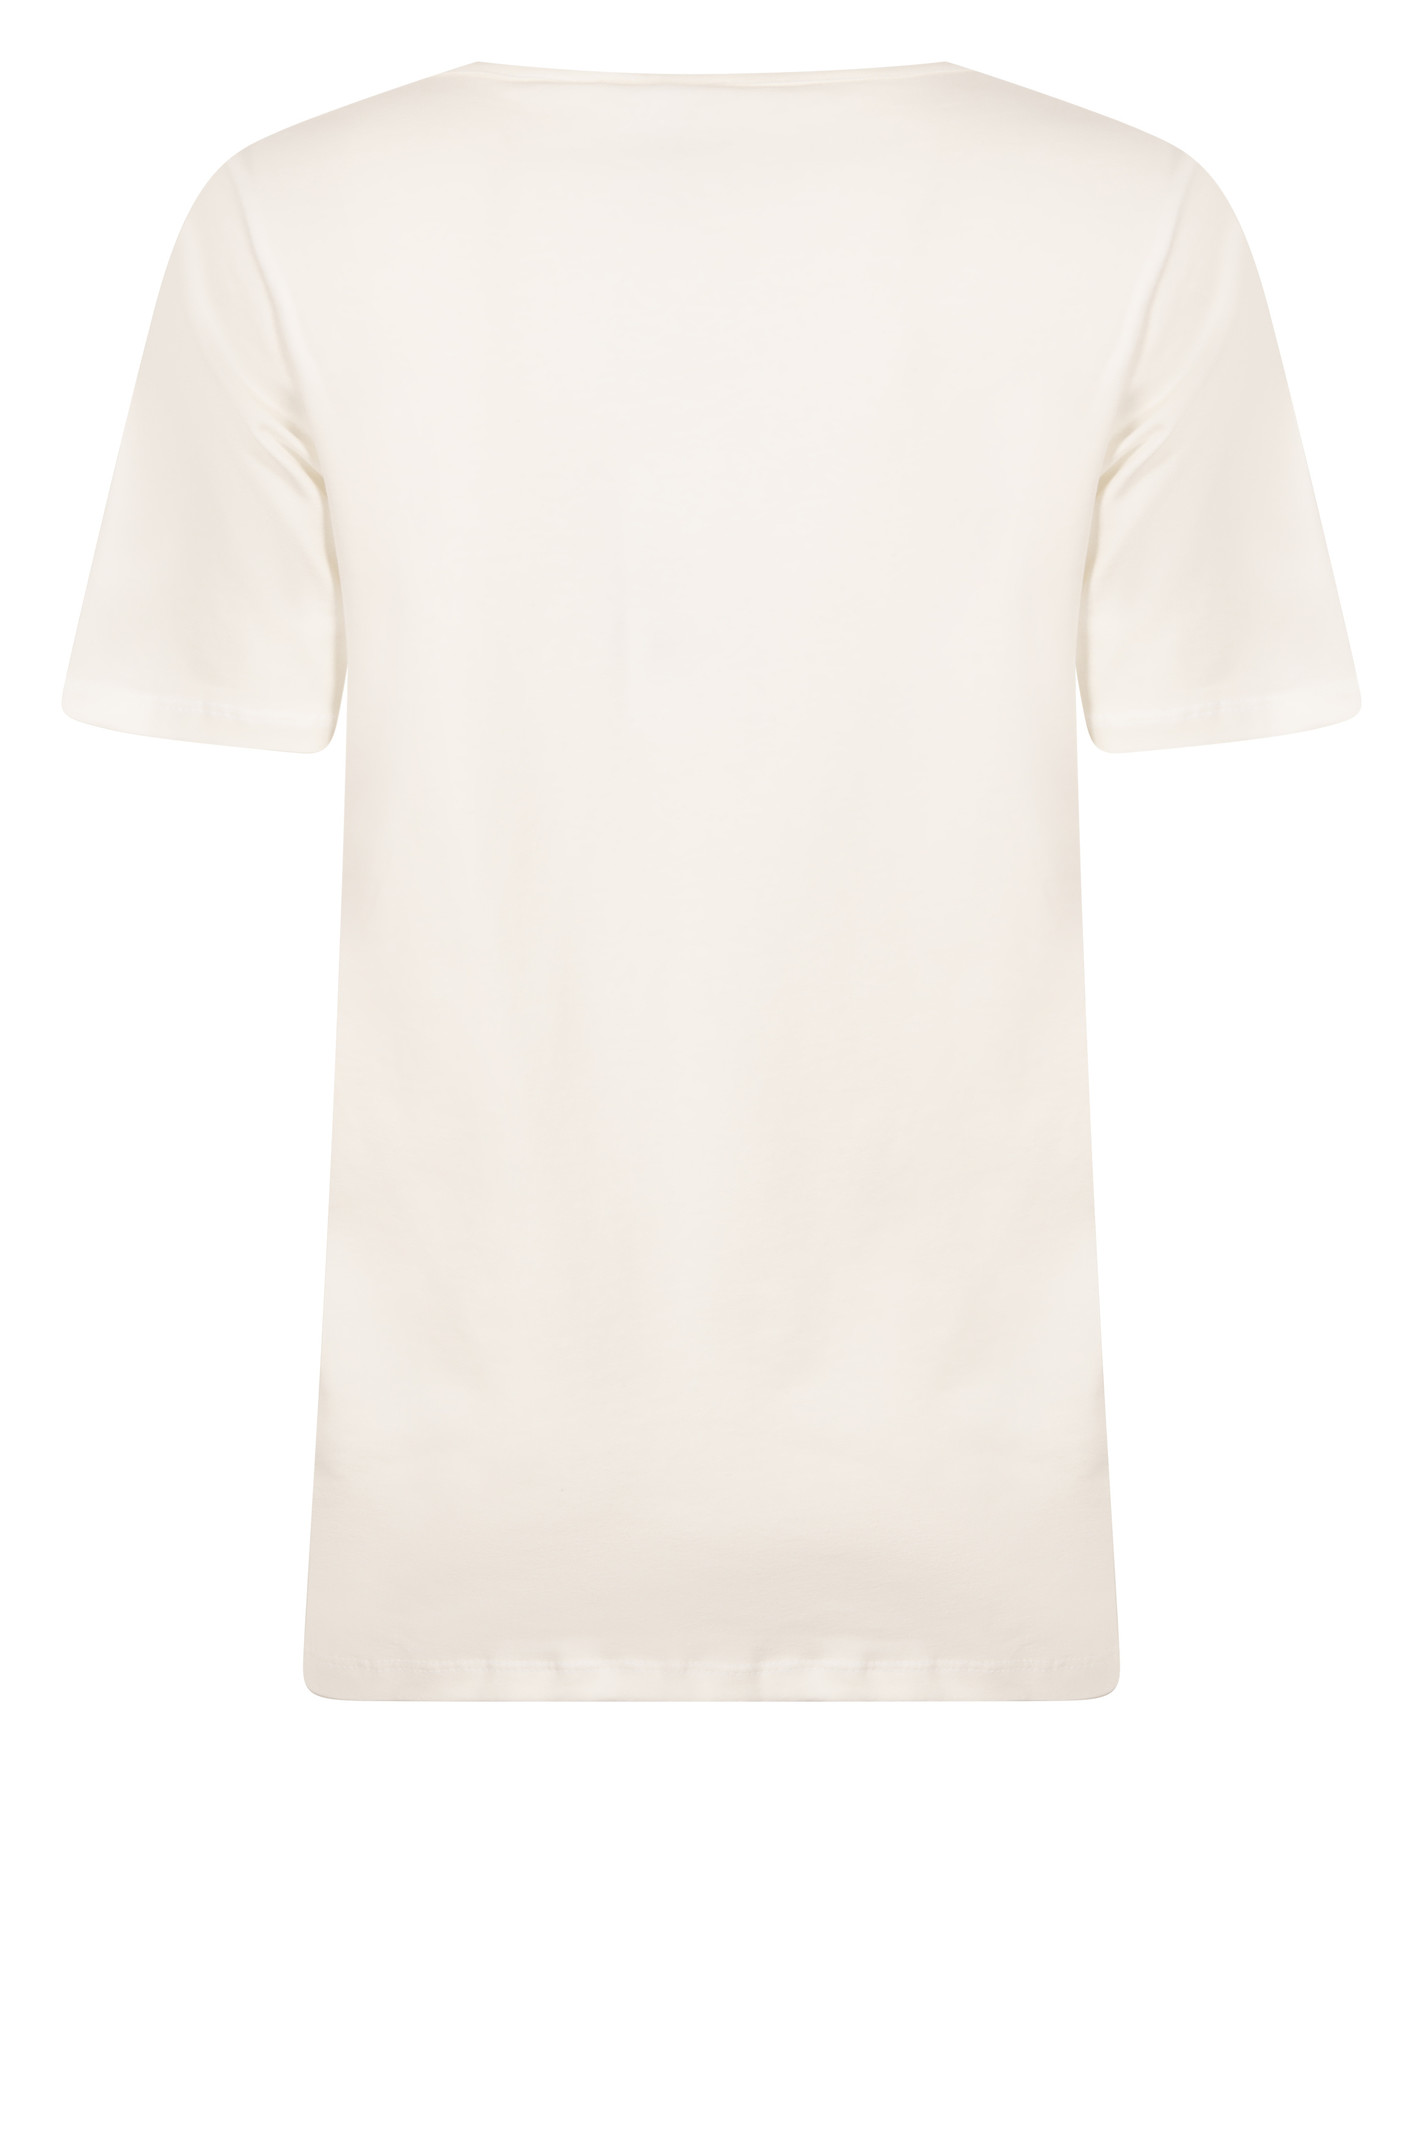 Zoso T-shirt 221 Megan with chest print off white/sand